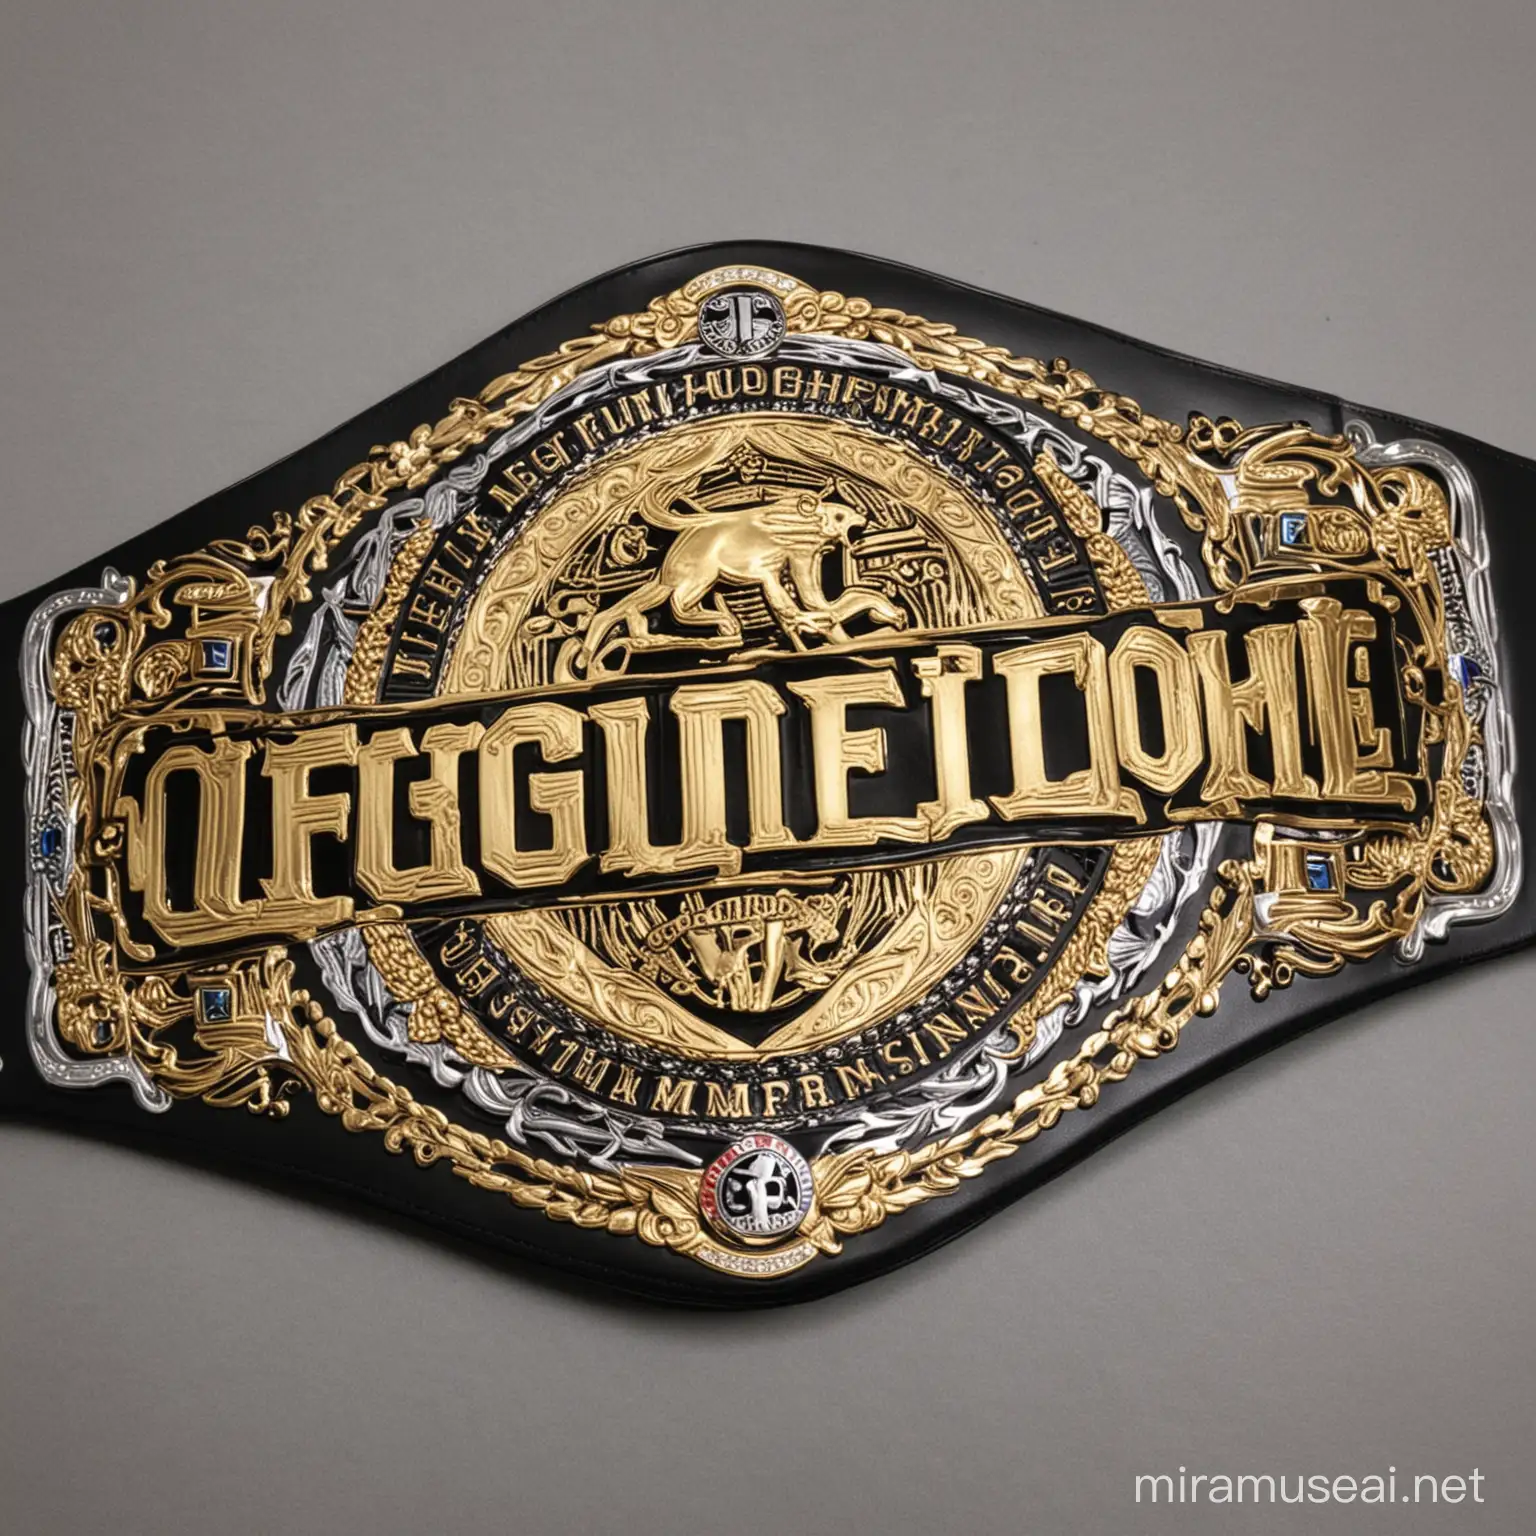 CFFCS middleweight championship belt